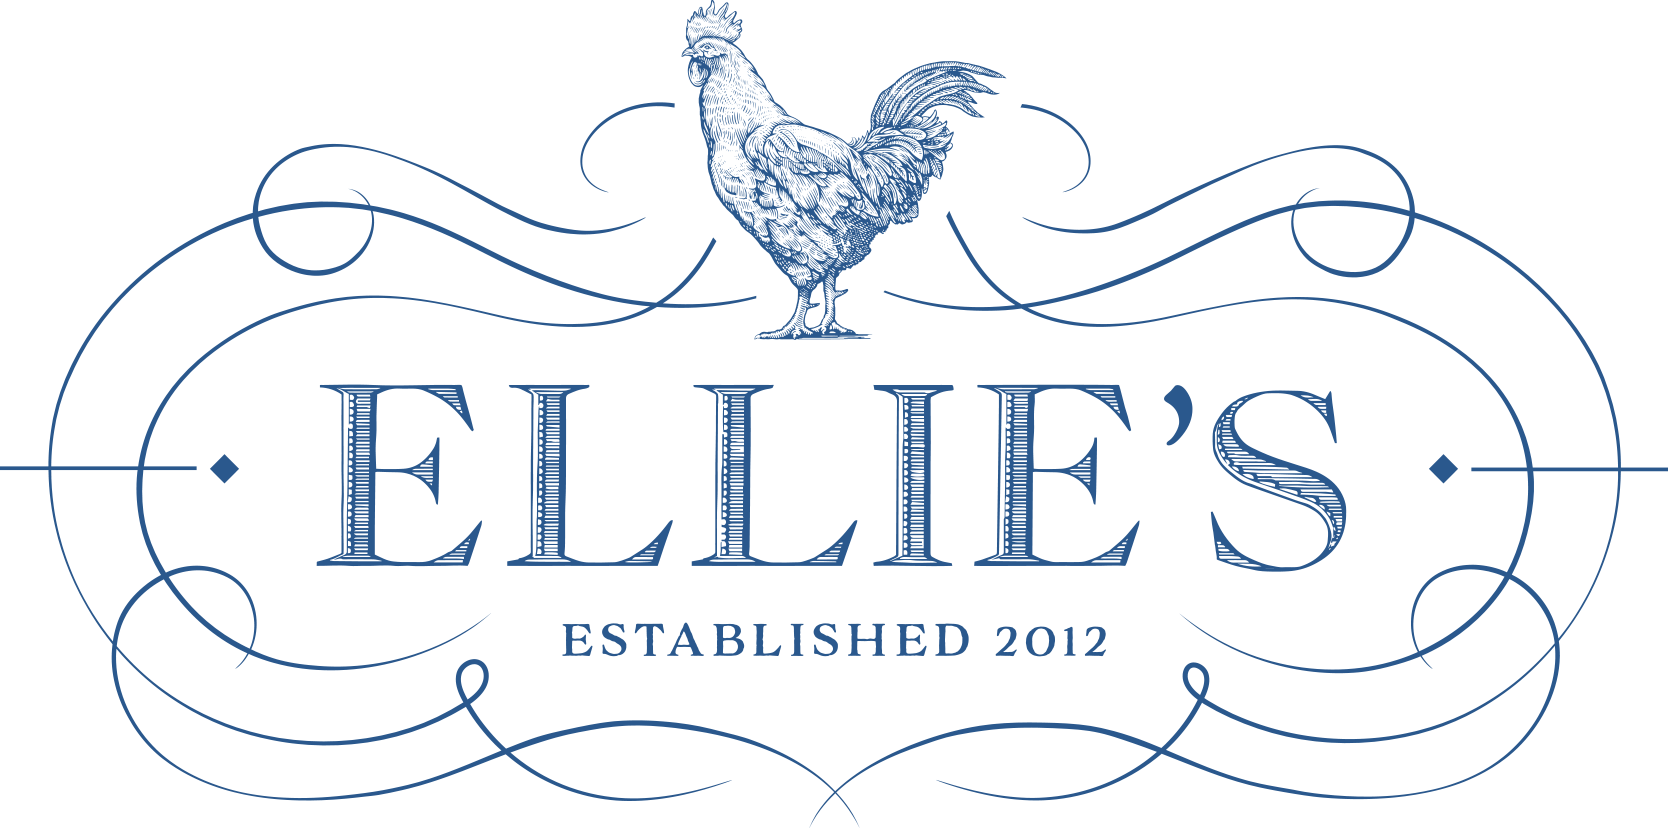 Serif font example: Ellie's Bakery logo